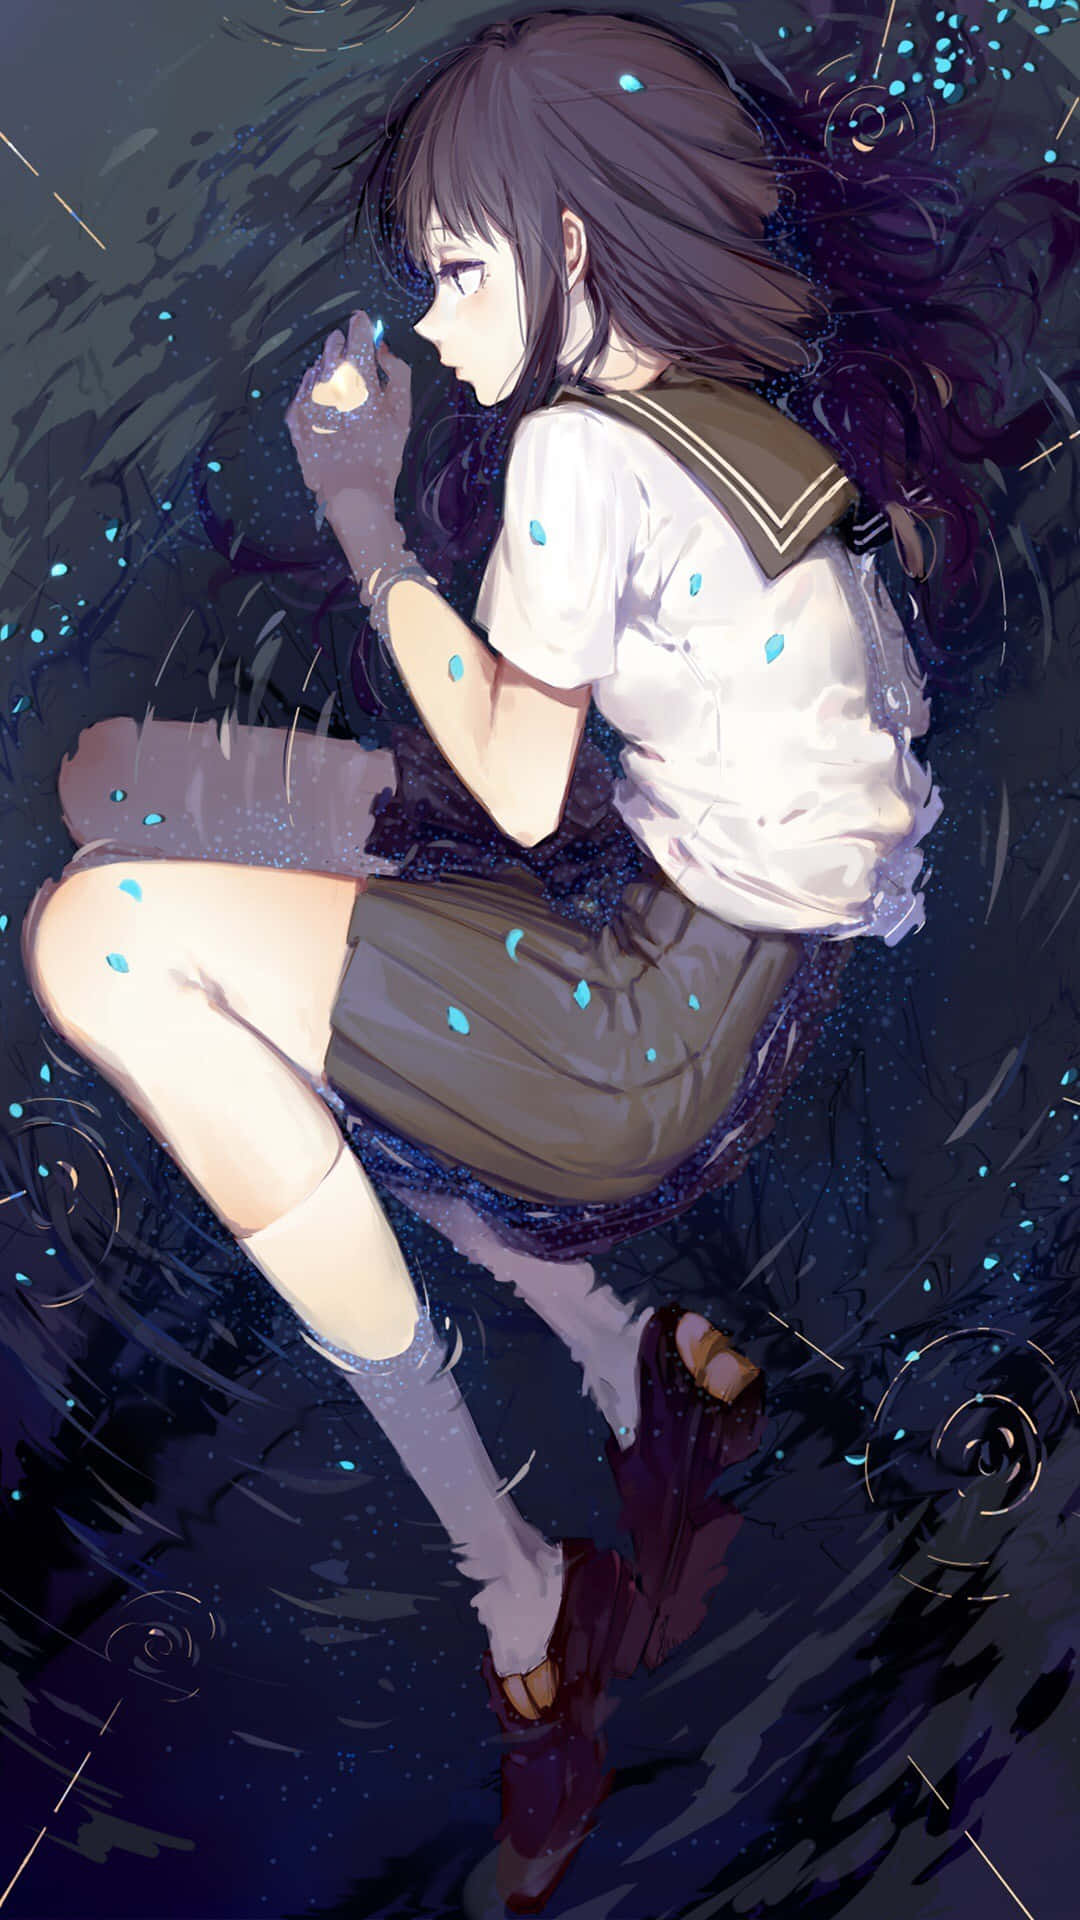 Pensive anime girl lying on her stomach - AI Generated Artwork - NightCafe  Creator